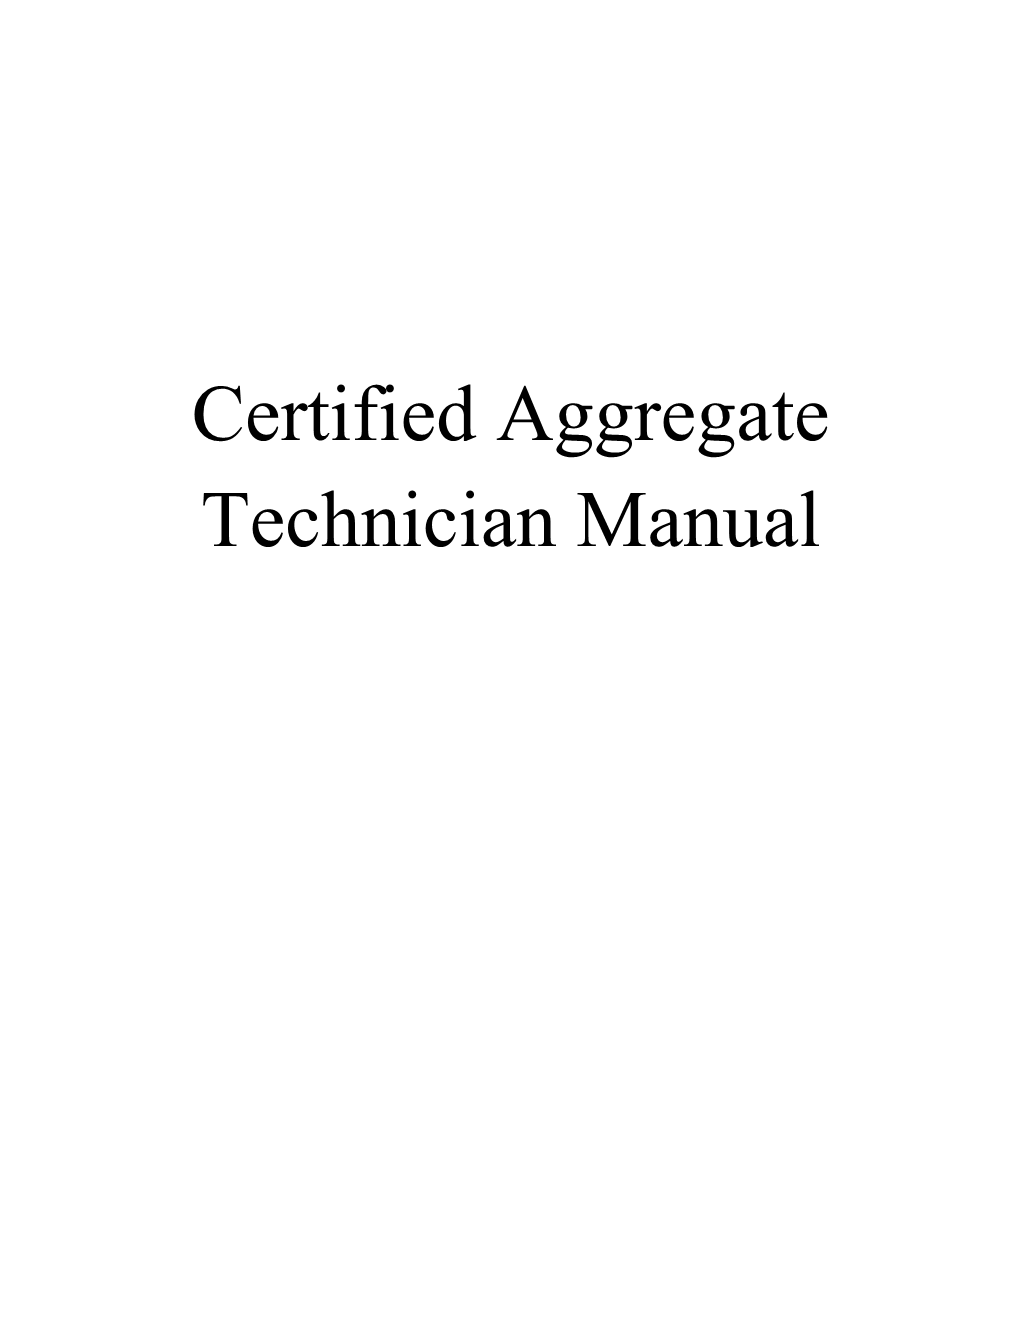 Certified Aggregate Technician Manual 10/1/16